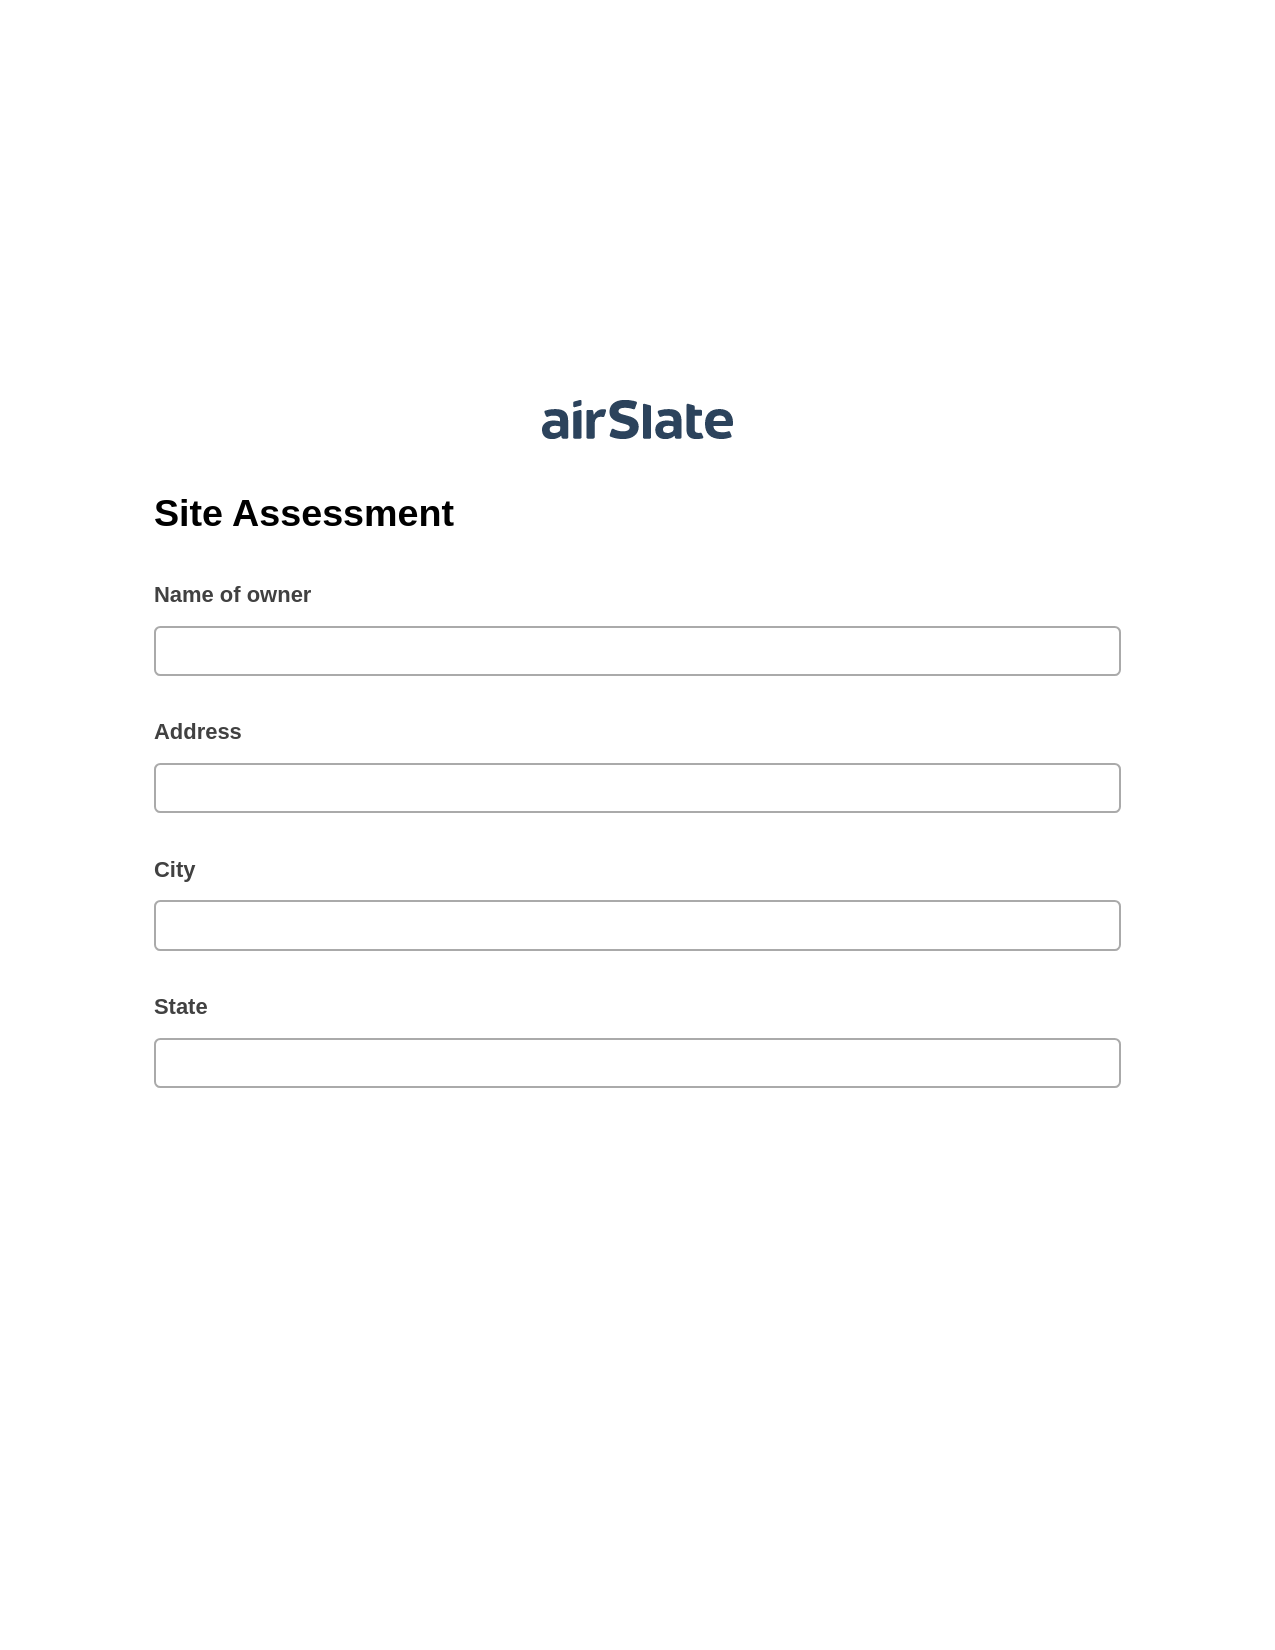 Site Assessment Pre-fill from Google Sheets Bot, SendGrid send Campaign bot, Export to MySQL Bot